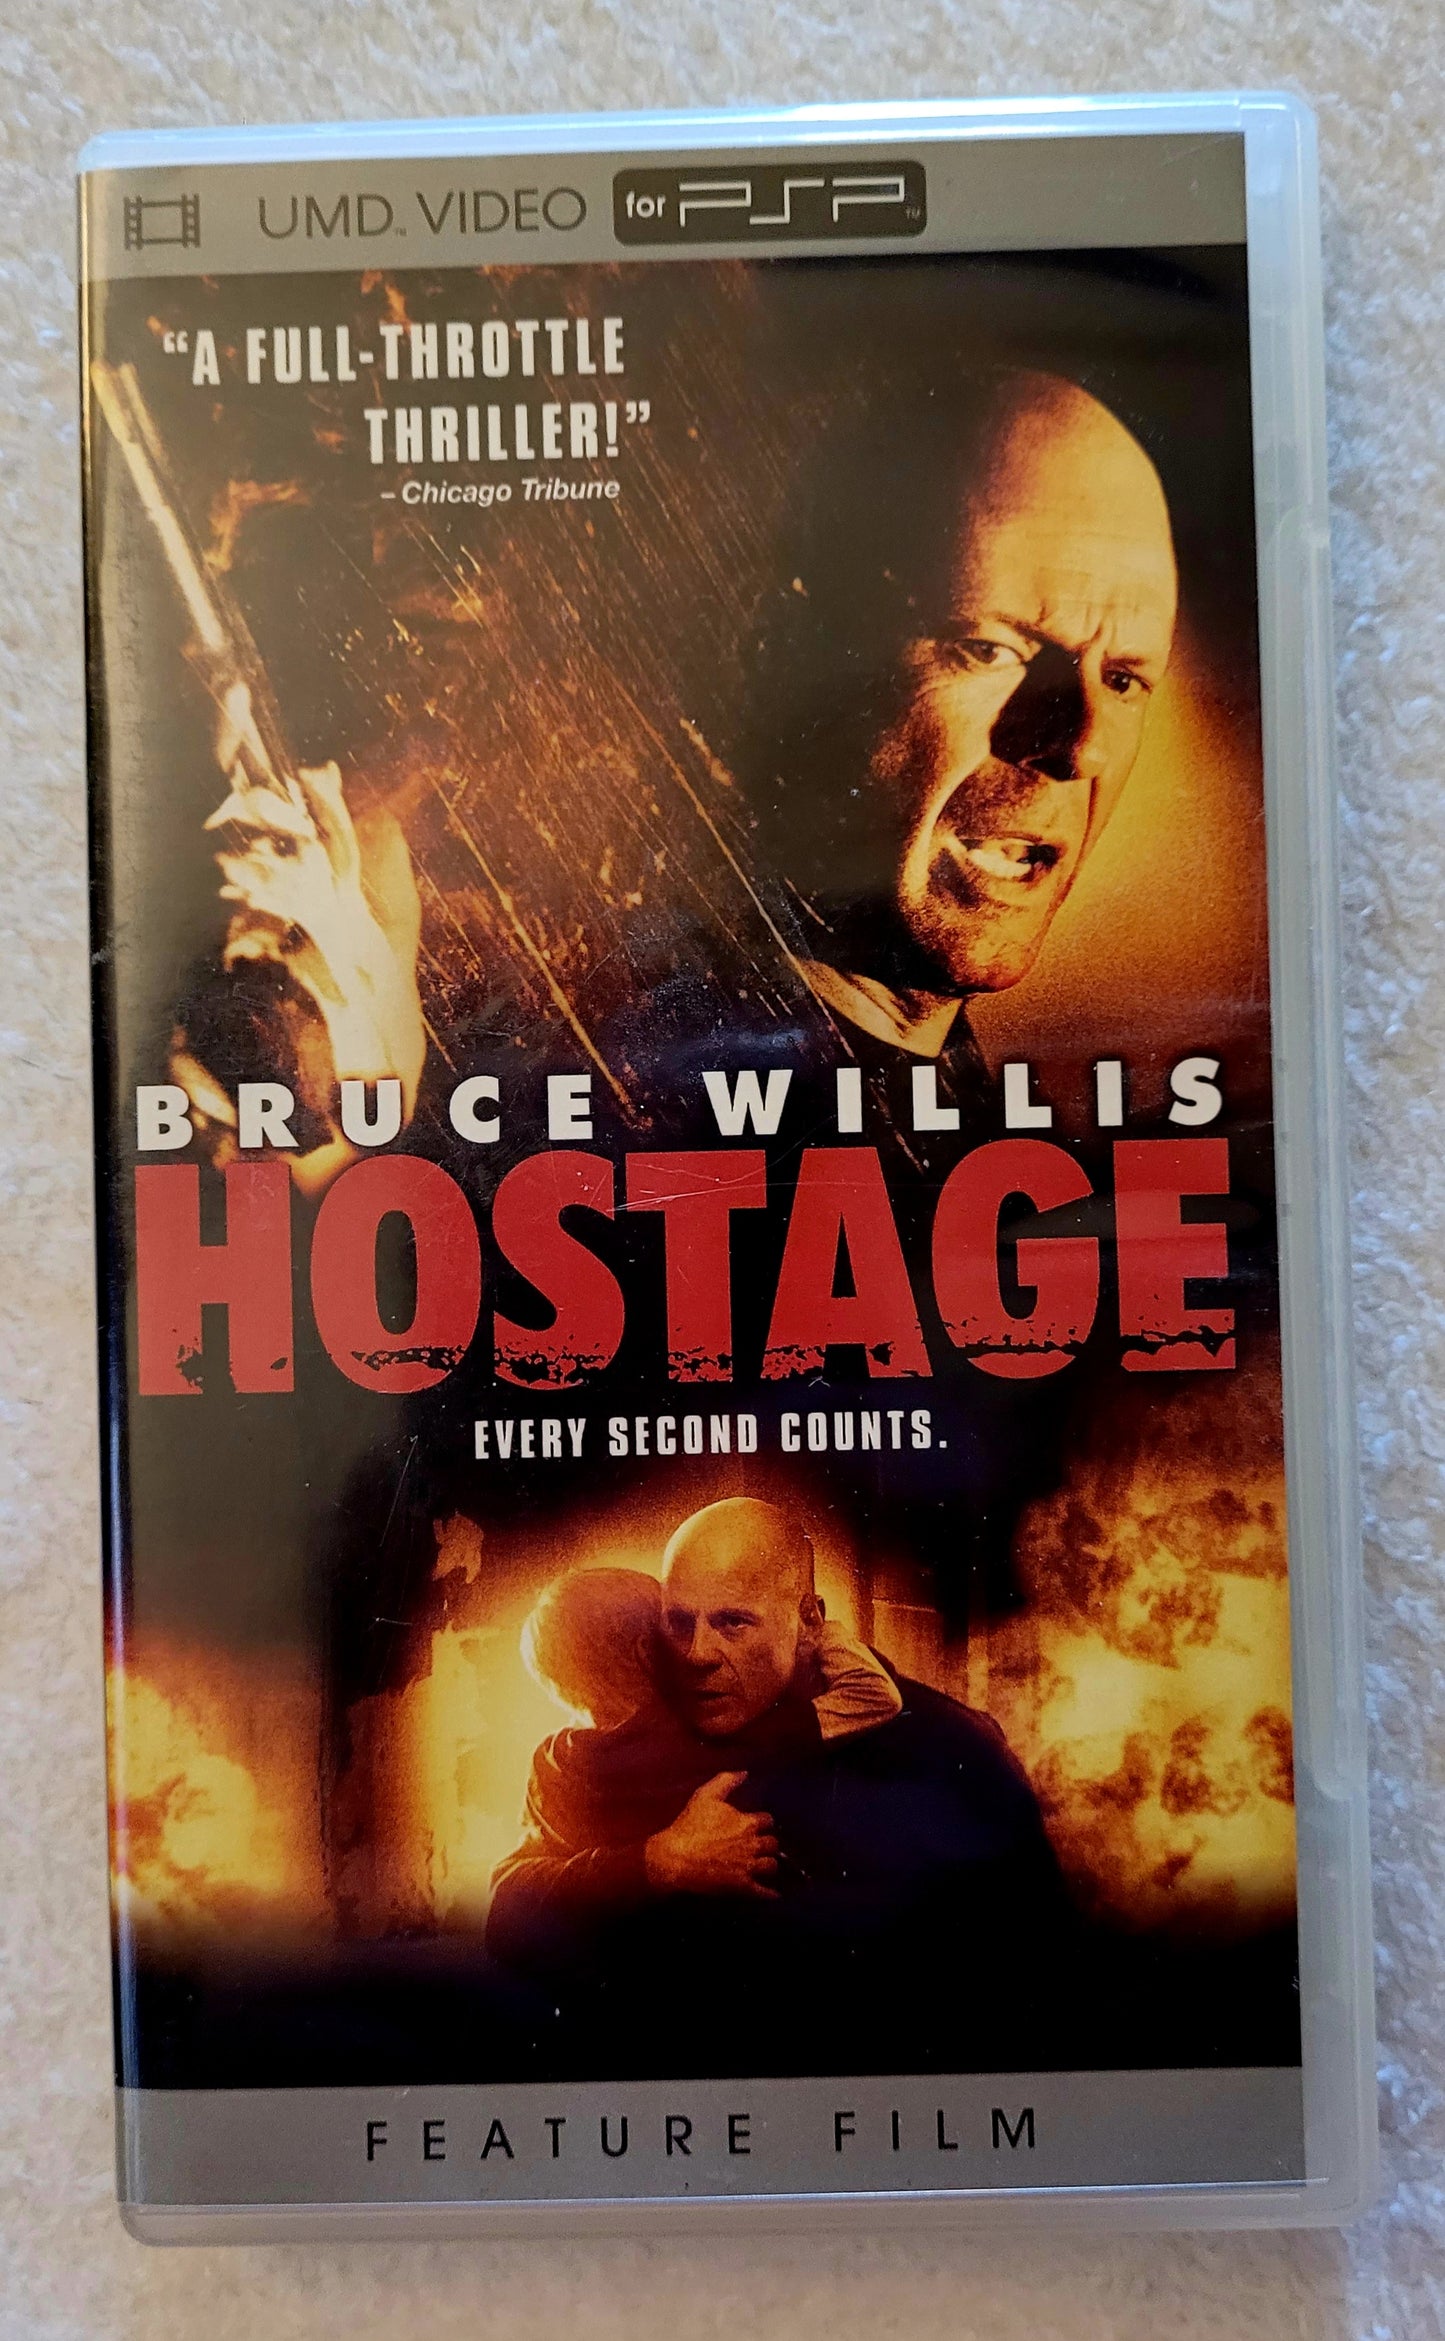 Bruce Willis in "Hostage" - UMD Video for PSP